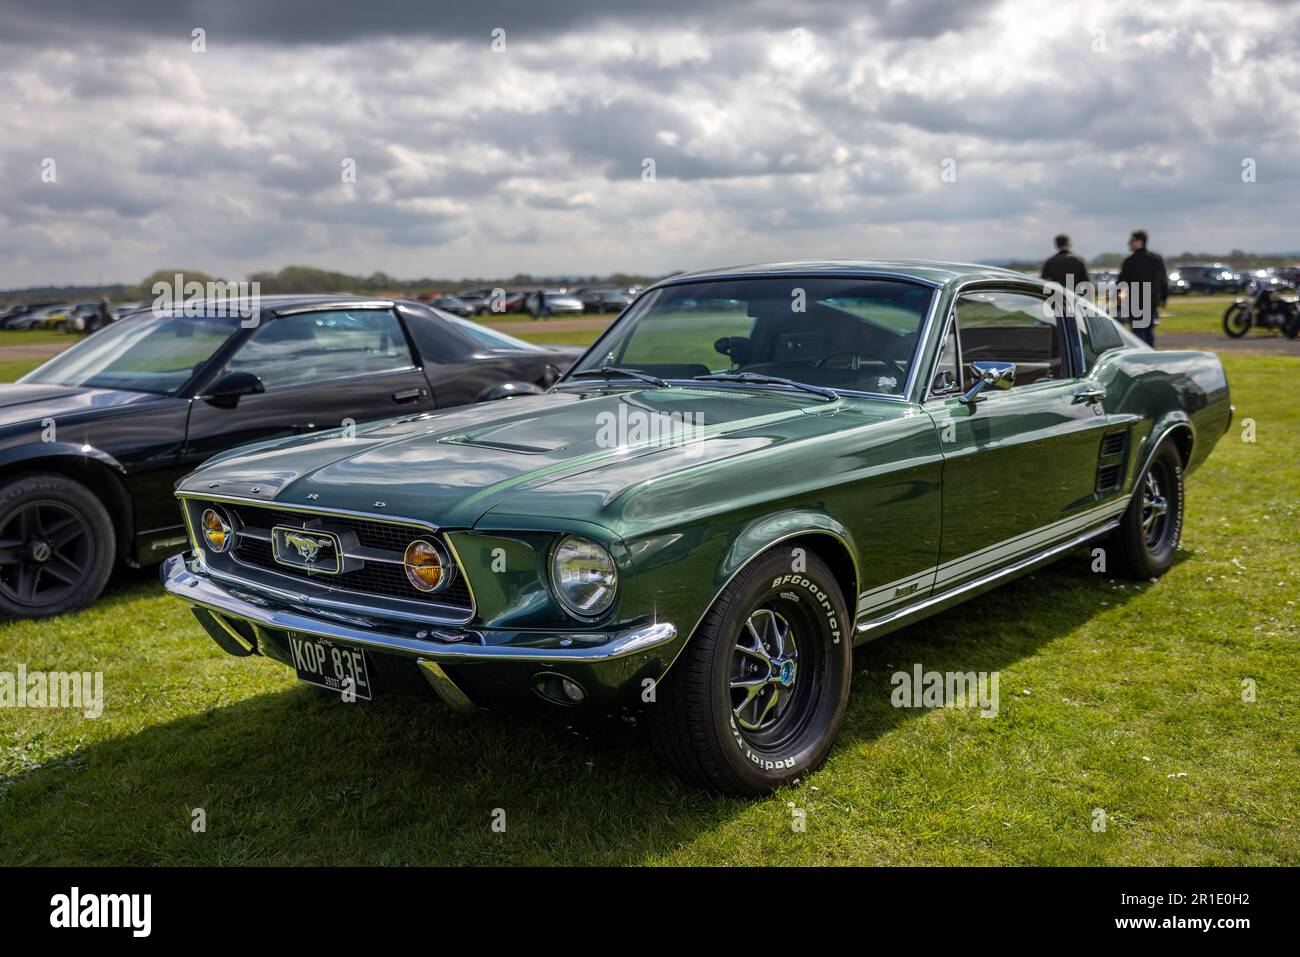 1967 Ford Mustang, on display at the April Scramble held at the ...